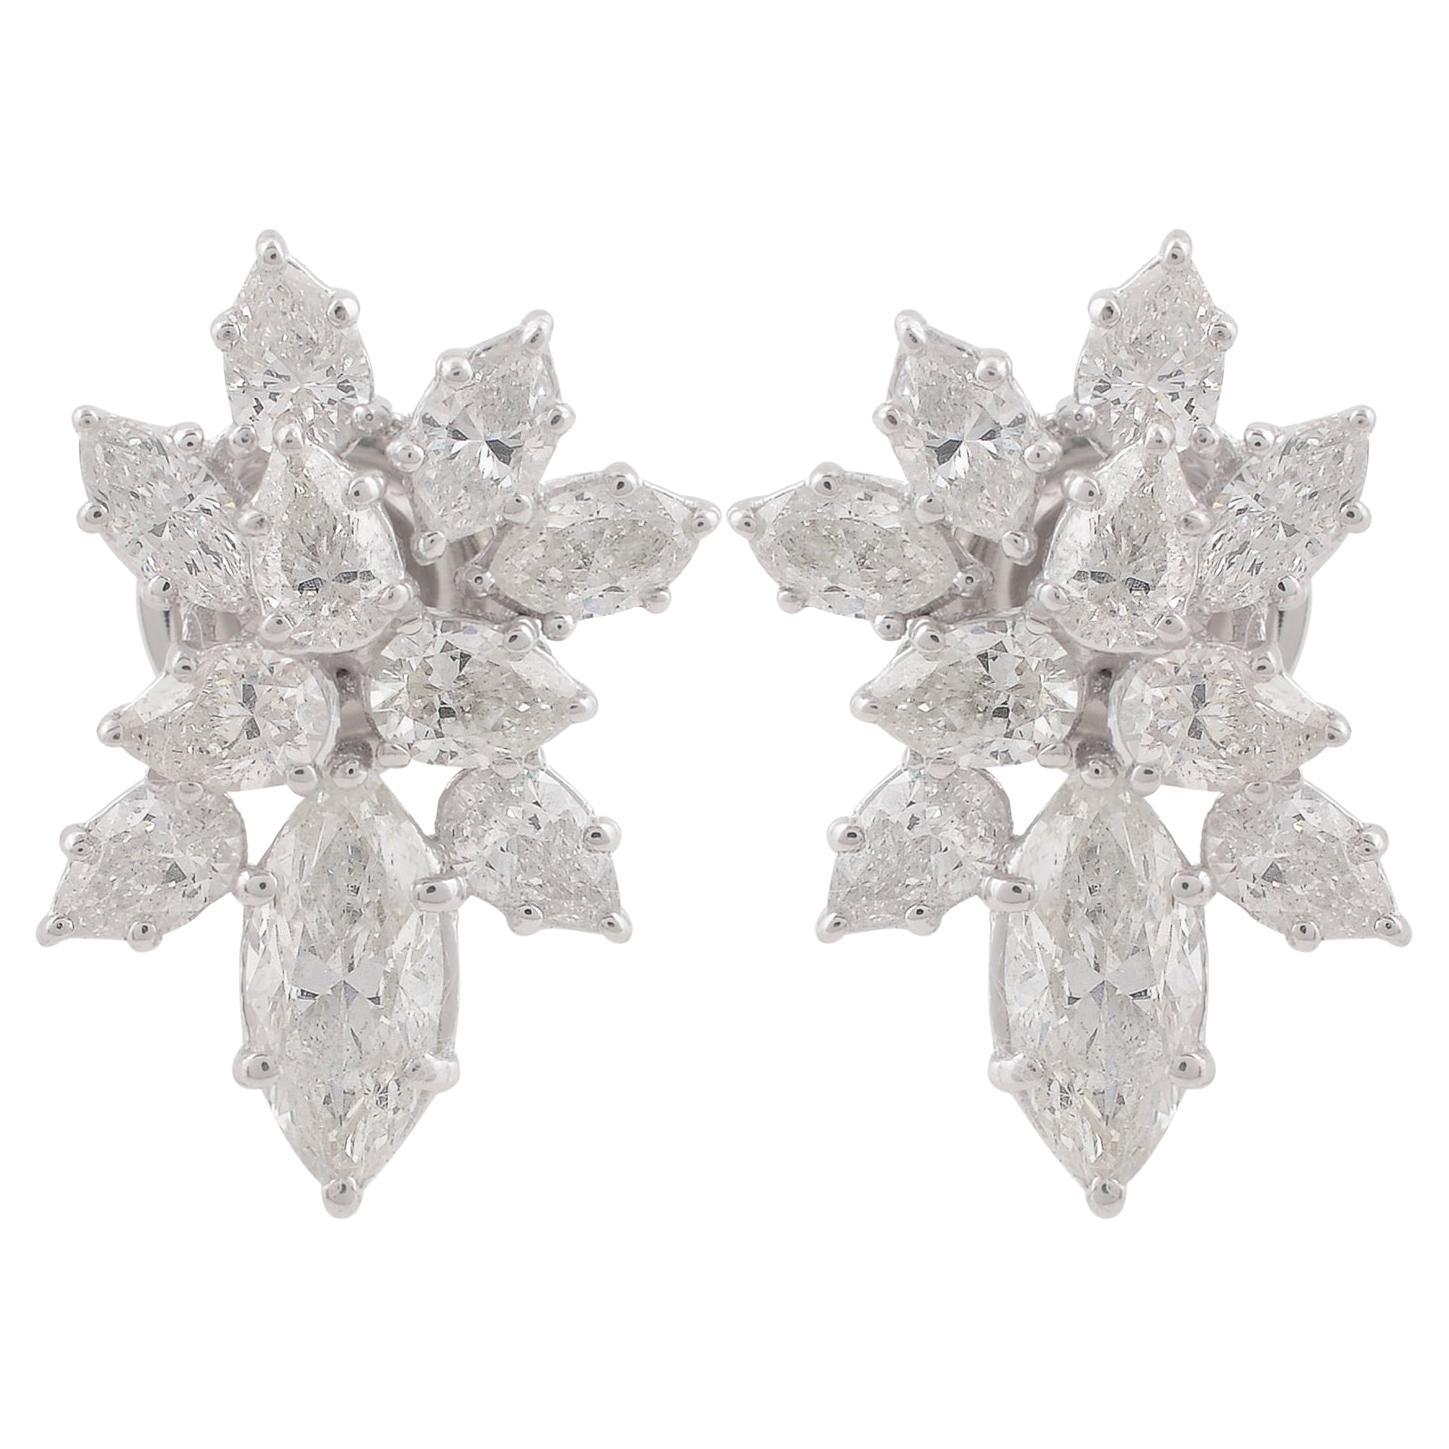 2.4 Carat SI Clarity HI Color Pear Marquise Diamond Earrings 18 Karat White Gold